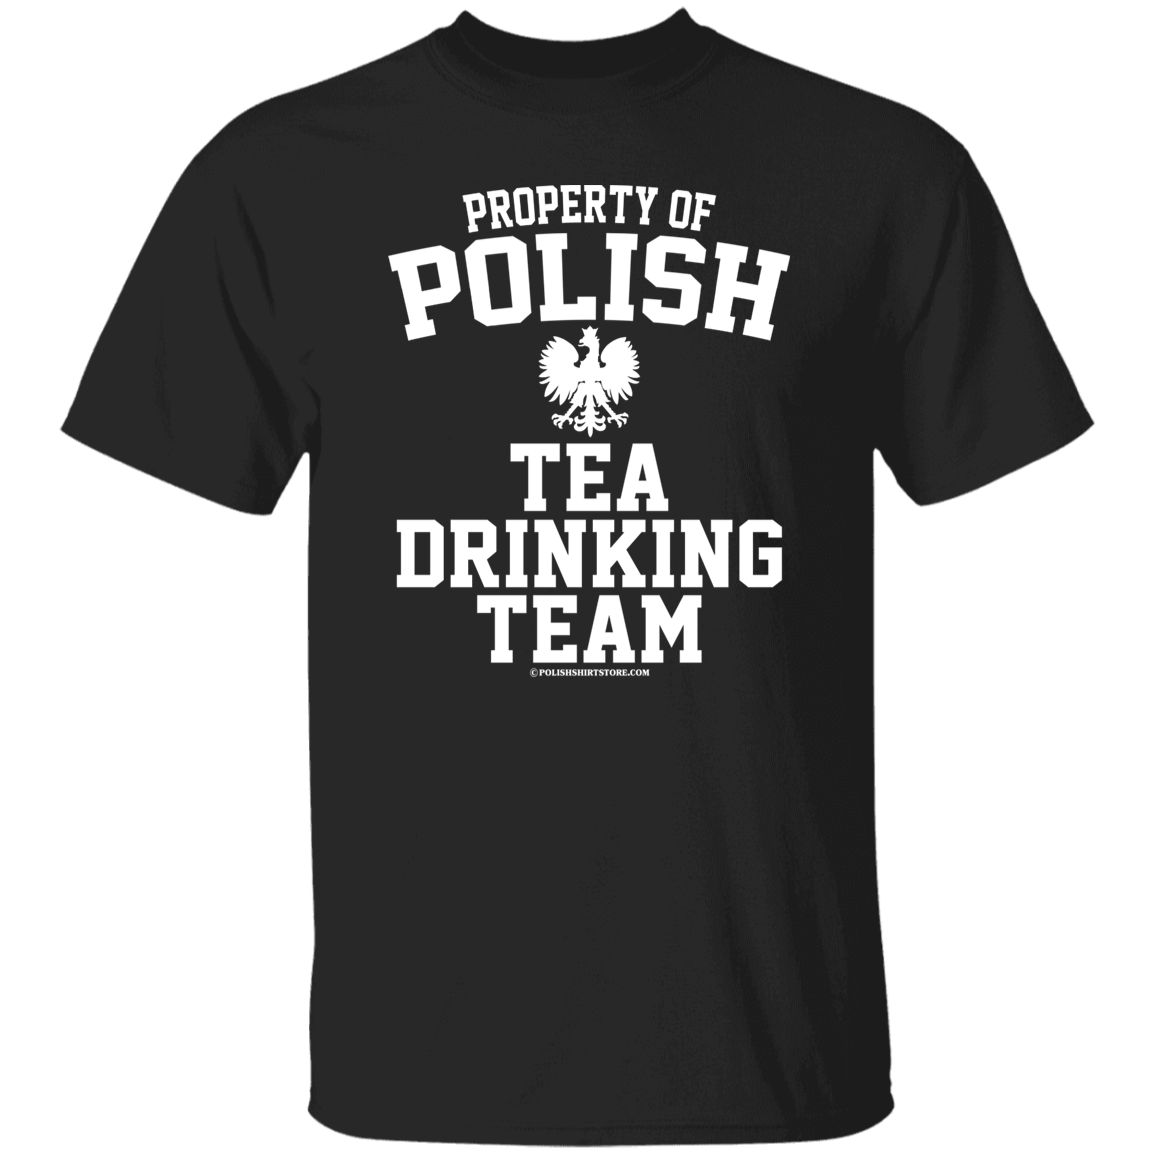 Property of Polish Tea Drinking Team Apparel CustomCat G500 5.3 oz. T-Shirt Black S